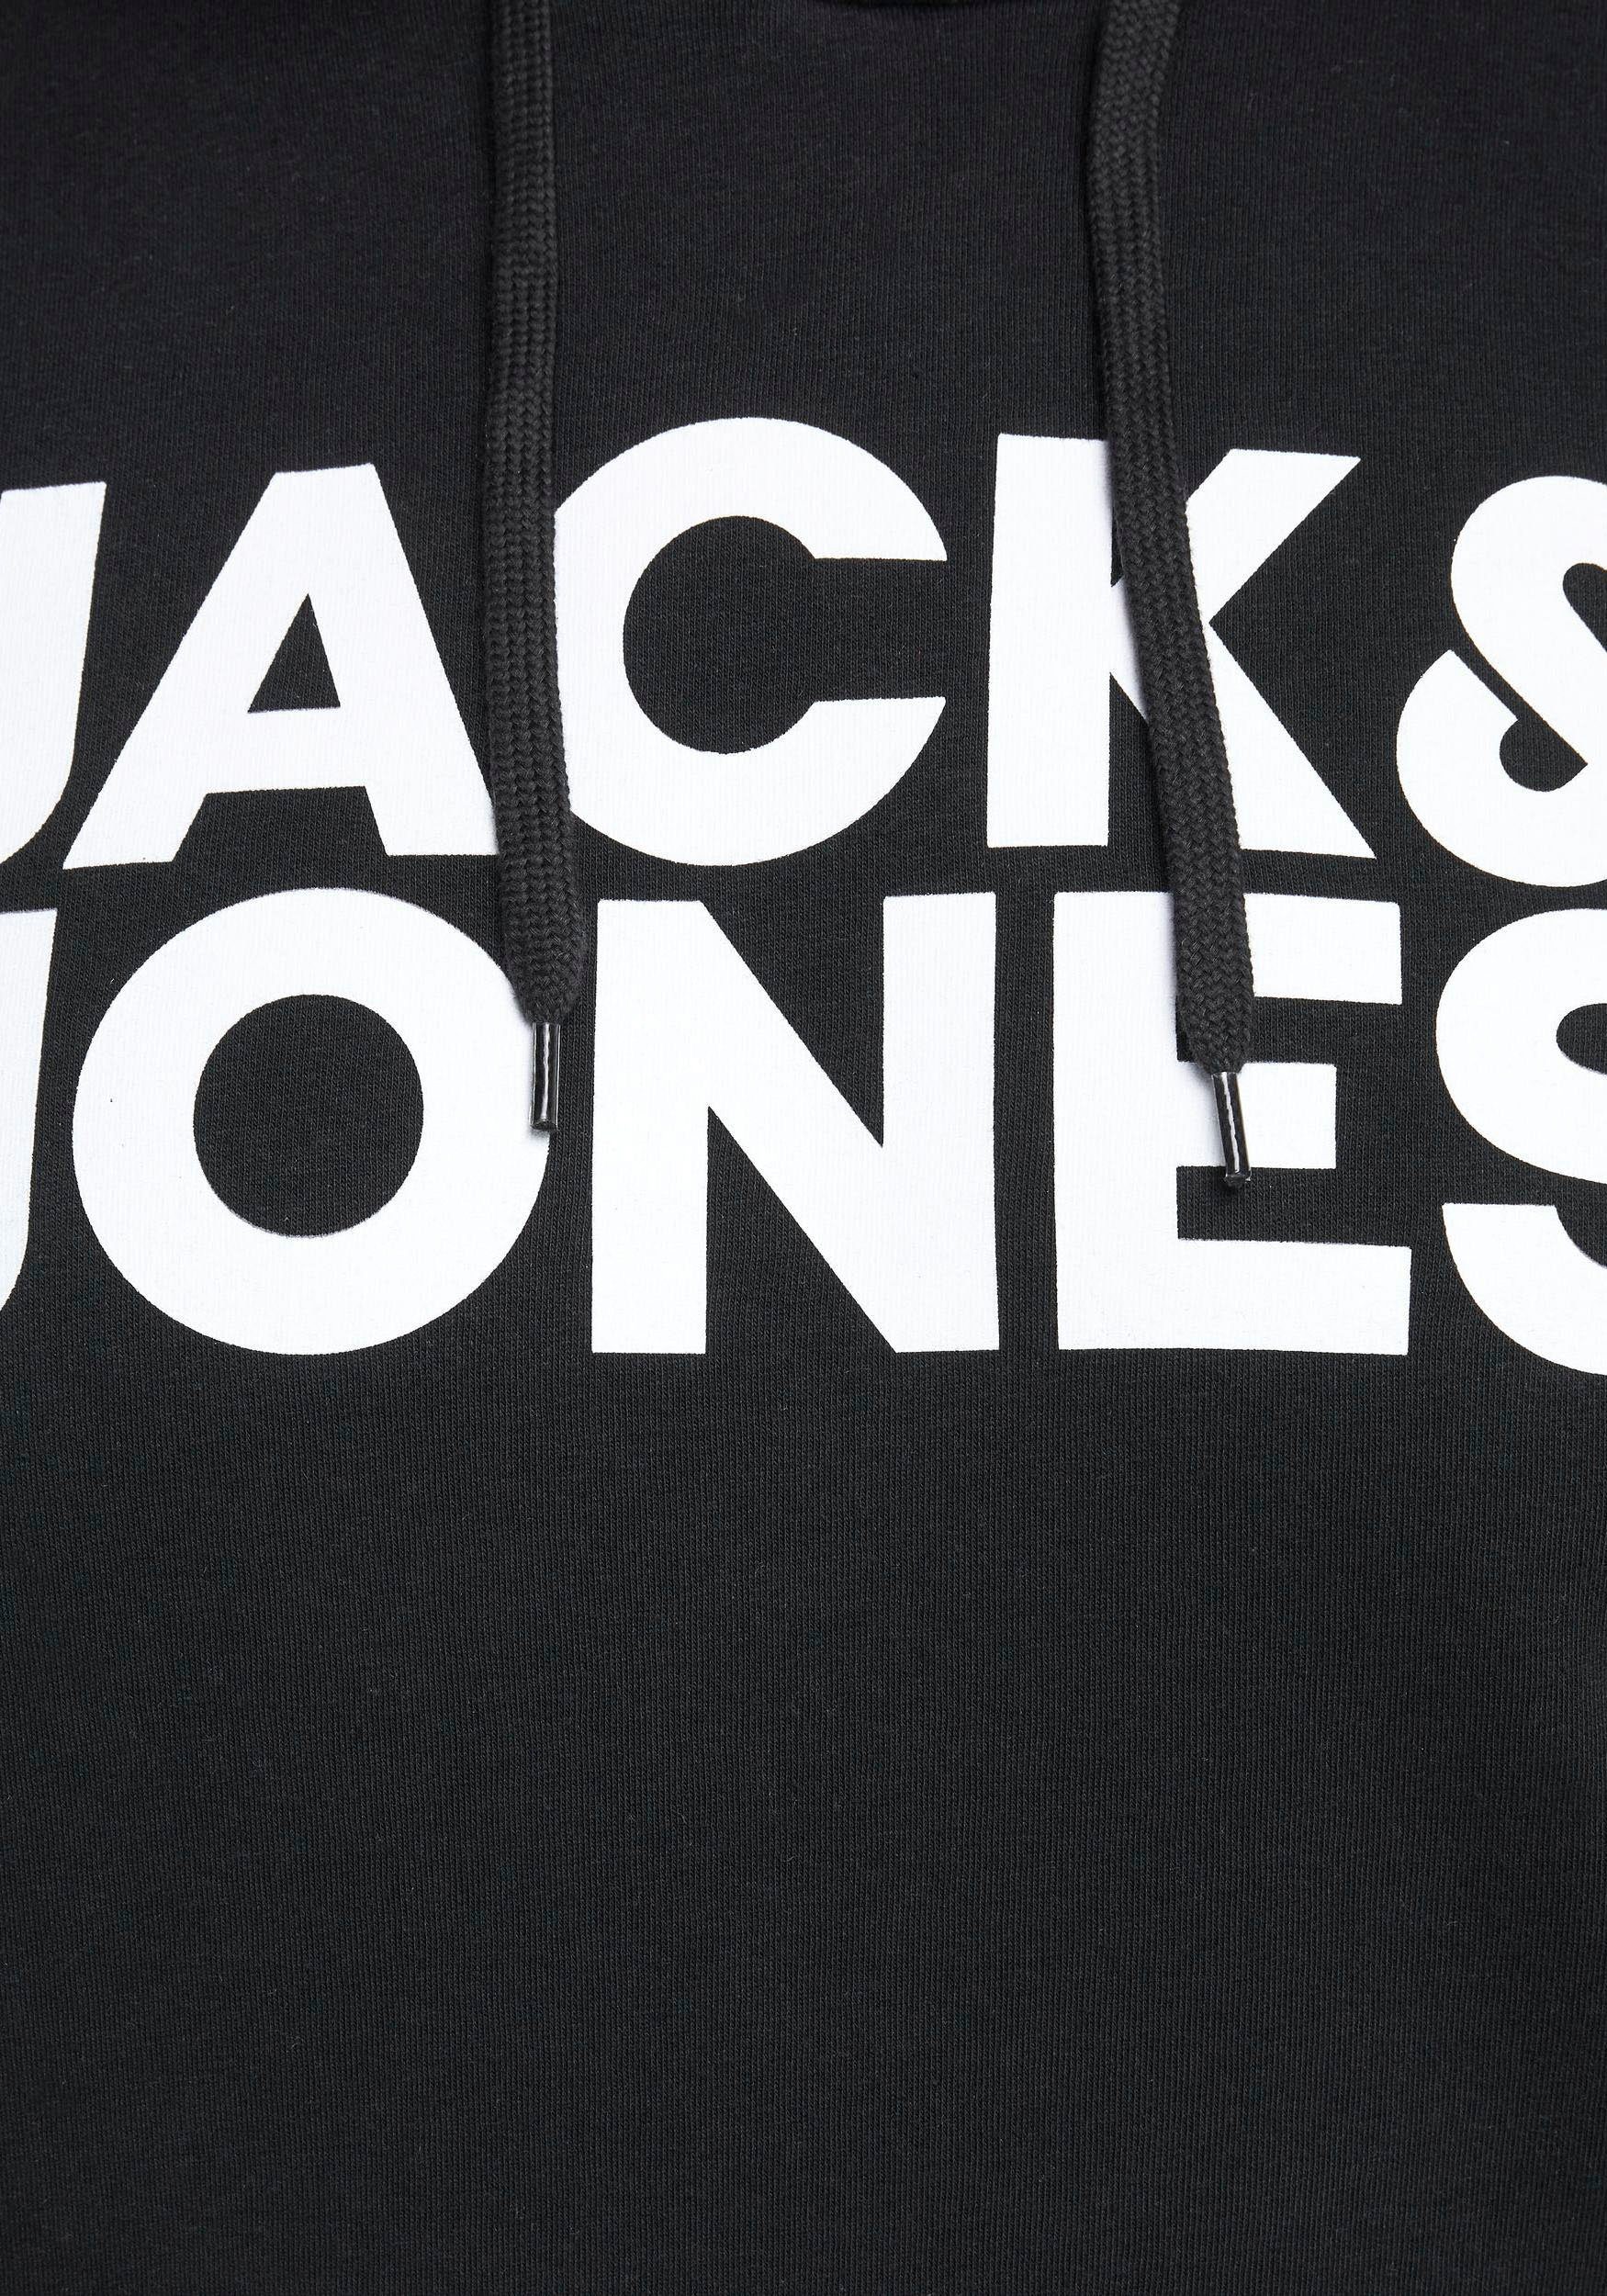 & HOOD Kapuzensweatshirt Bis Jack SWEAT 6XL schwarz Größe CORP LOGO Jones PlusSize